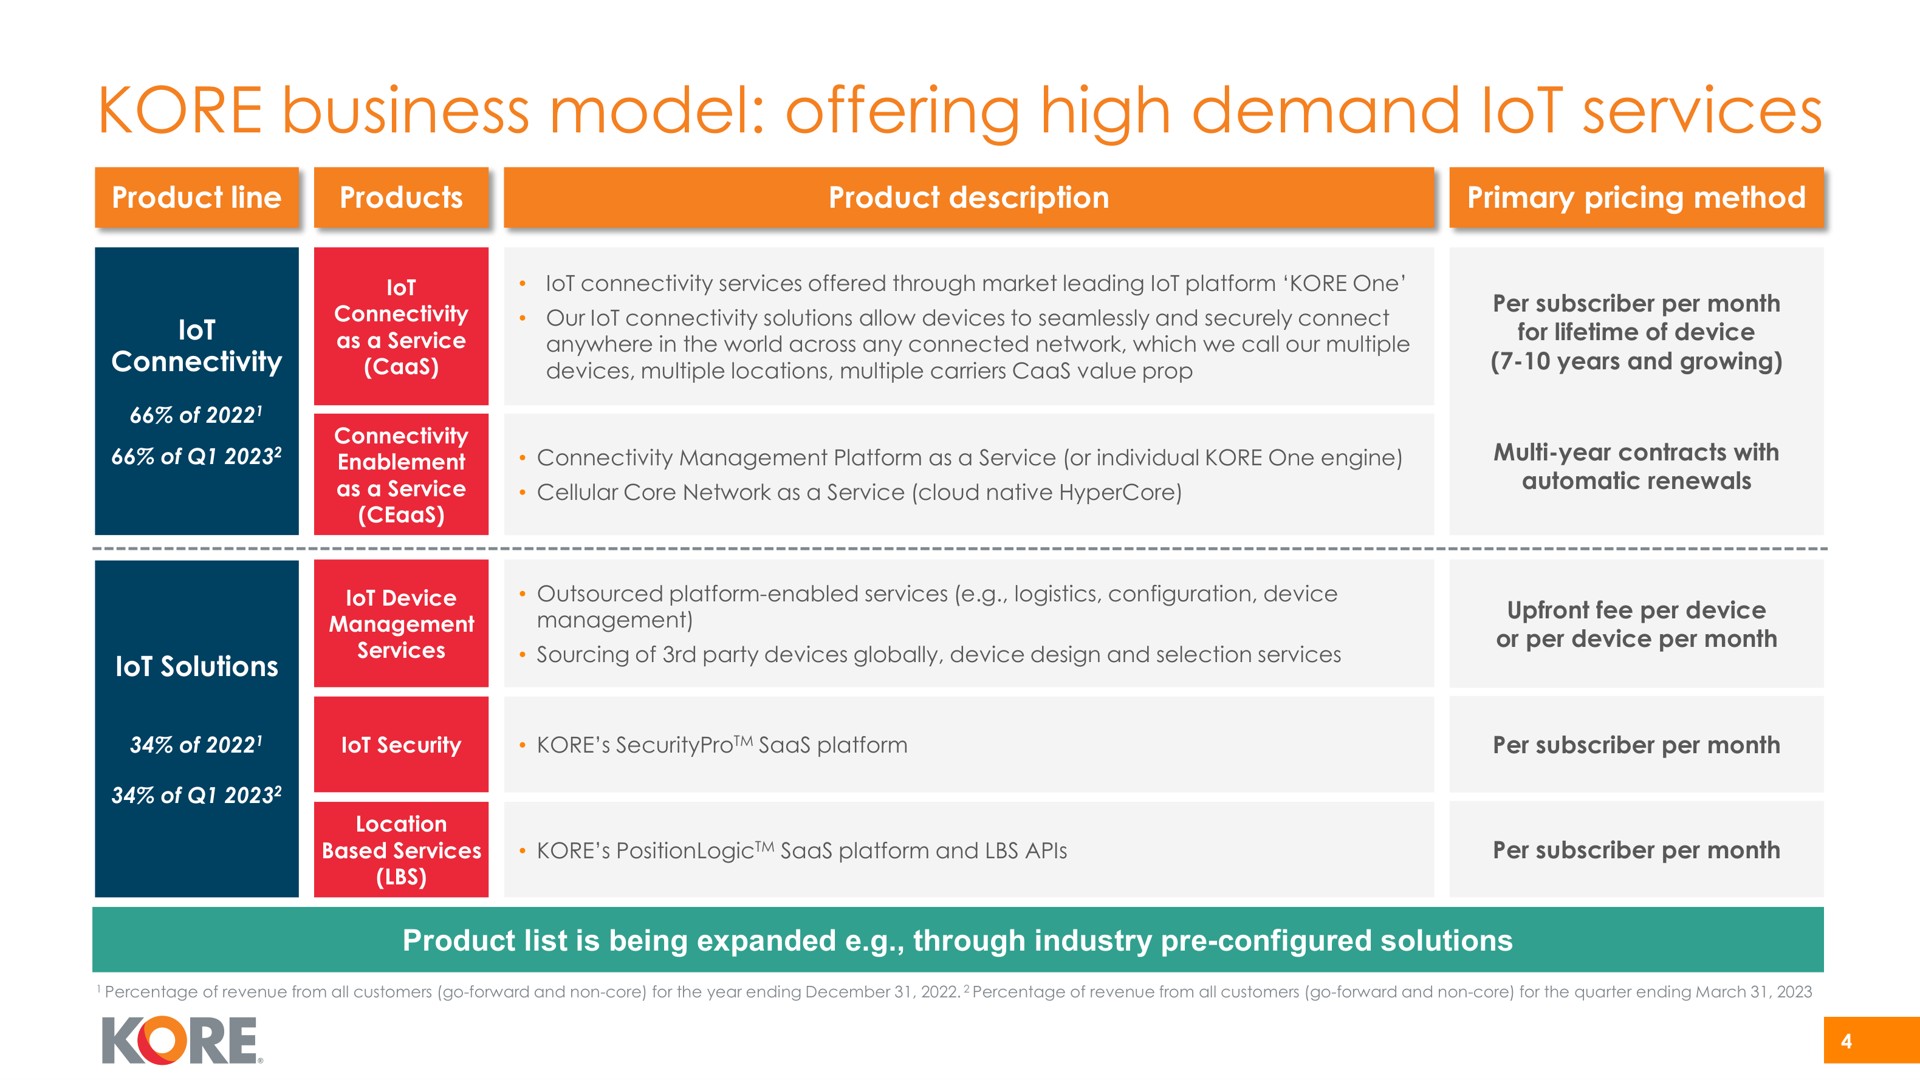 kore business model offering high demand services | Kore